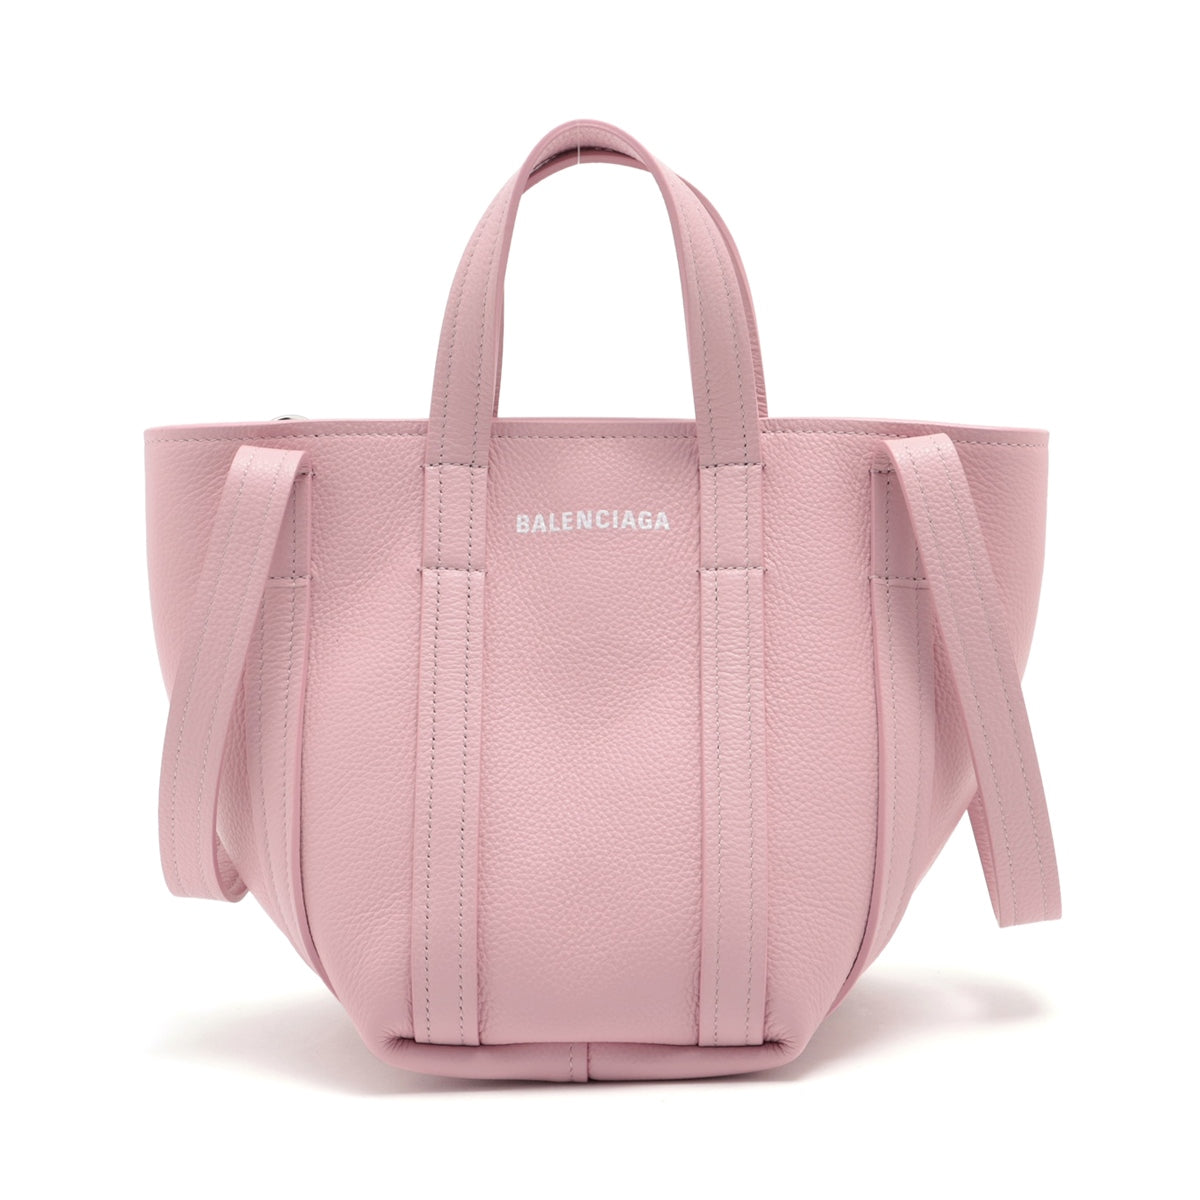 Balenciaga Everyday Tote XS Leather 2way handbag Pink 672793